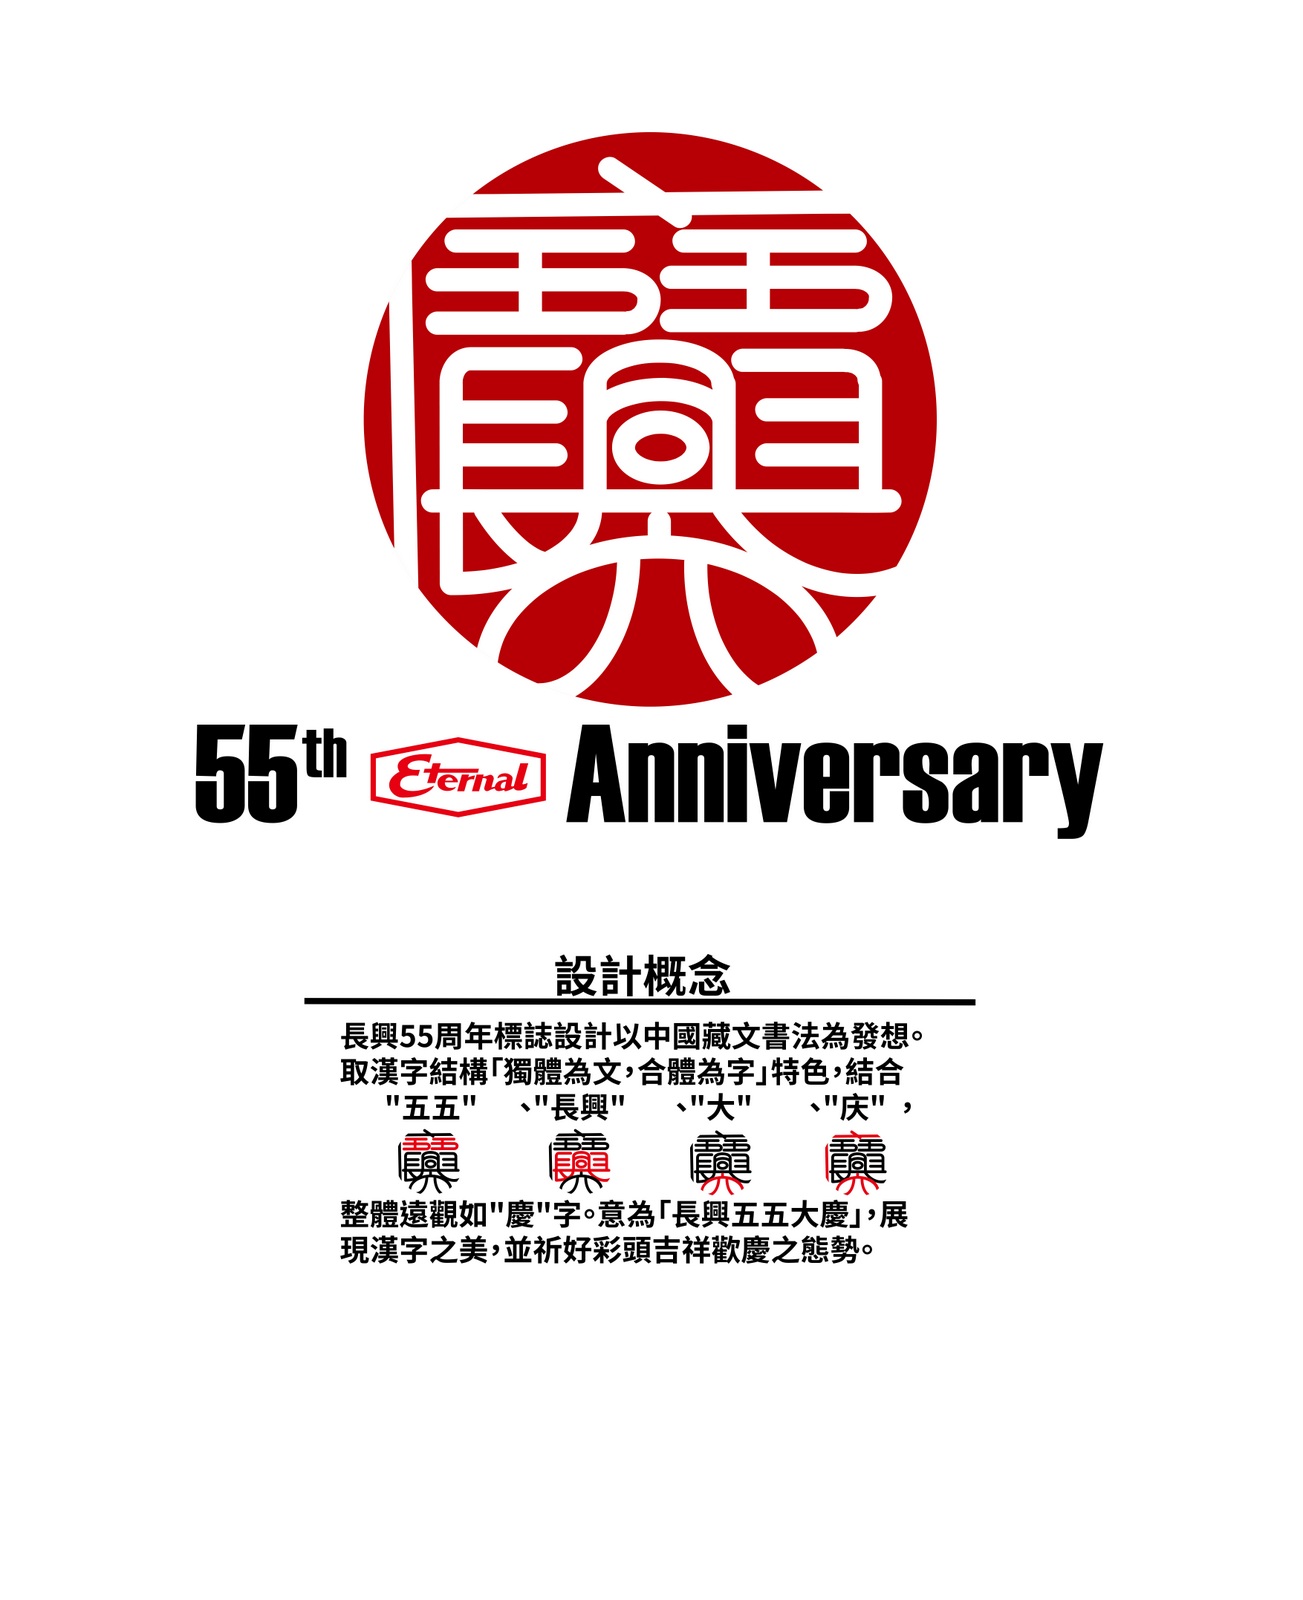 Eternal 55th Anniversary